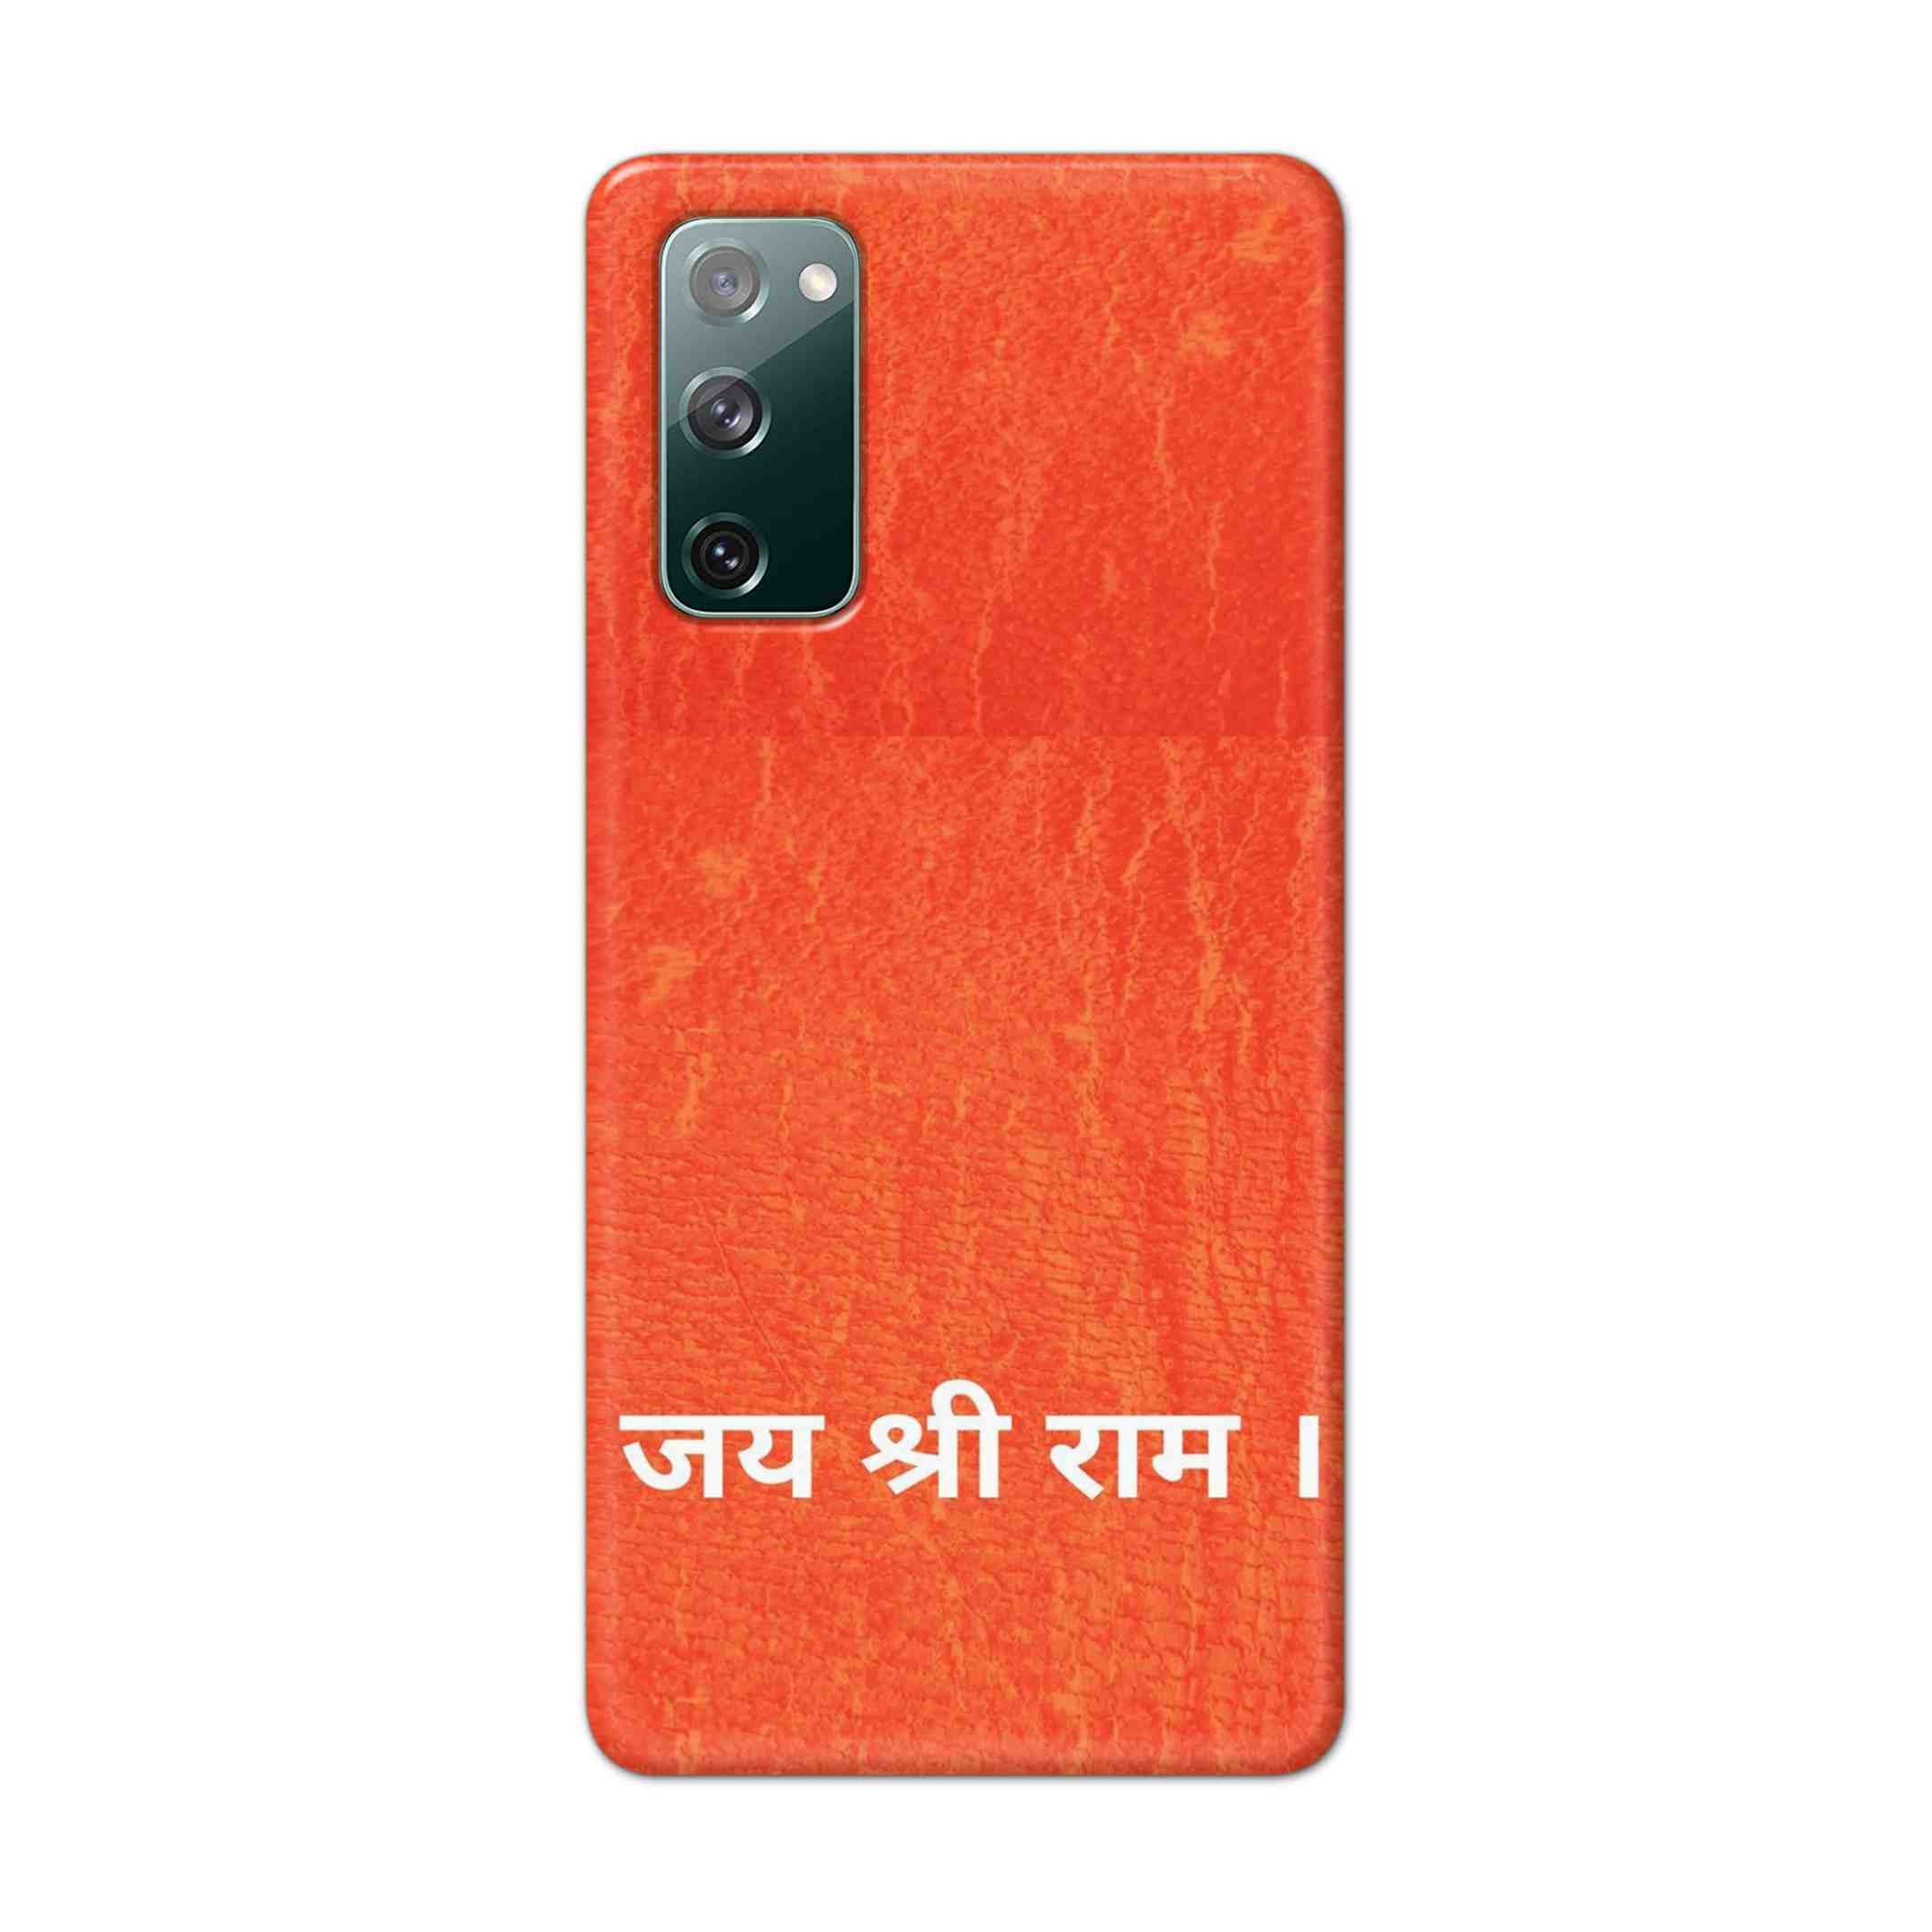 Buy Jai Shree Ram Hard Back Mobile Phone Case Cover For Samsung Galaxy S20 FE Online